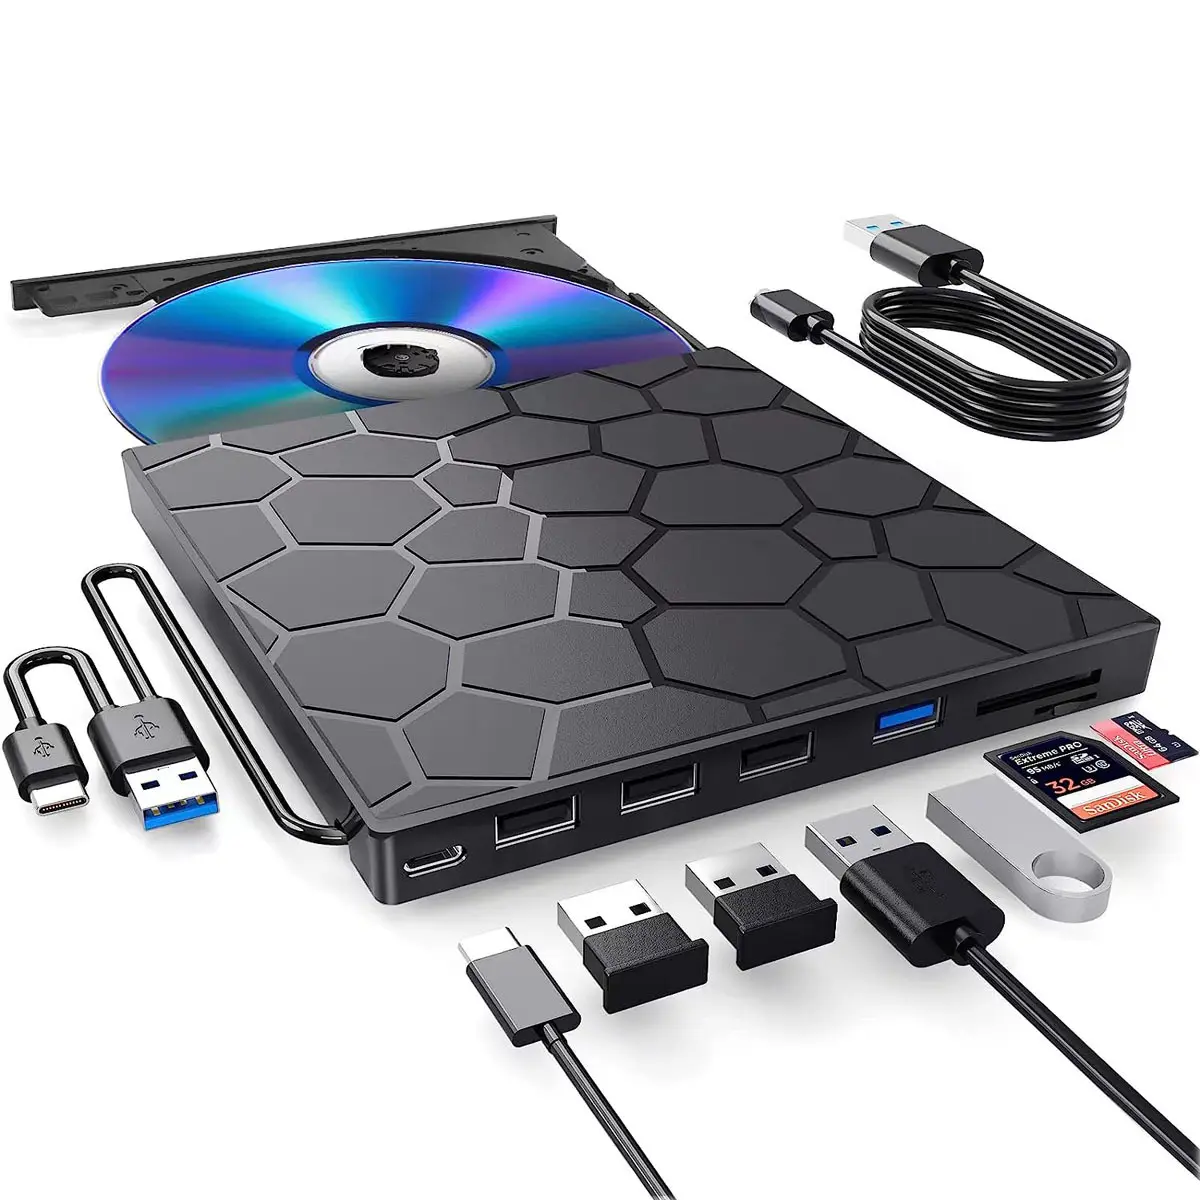 Pembaca kartu SD, multi-fungsi 7-in-1 eksternal DVD Burner tipe-c USB 3.0 TF pembaca kartu CD/DVD RW Optical Drive/DVD Player CD ROM